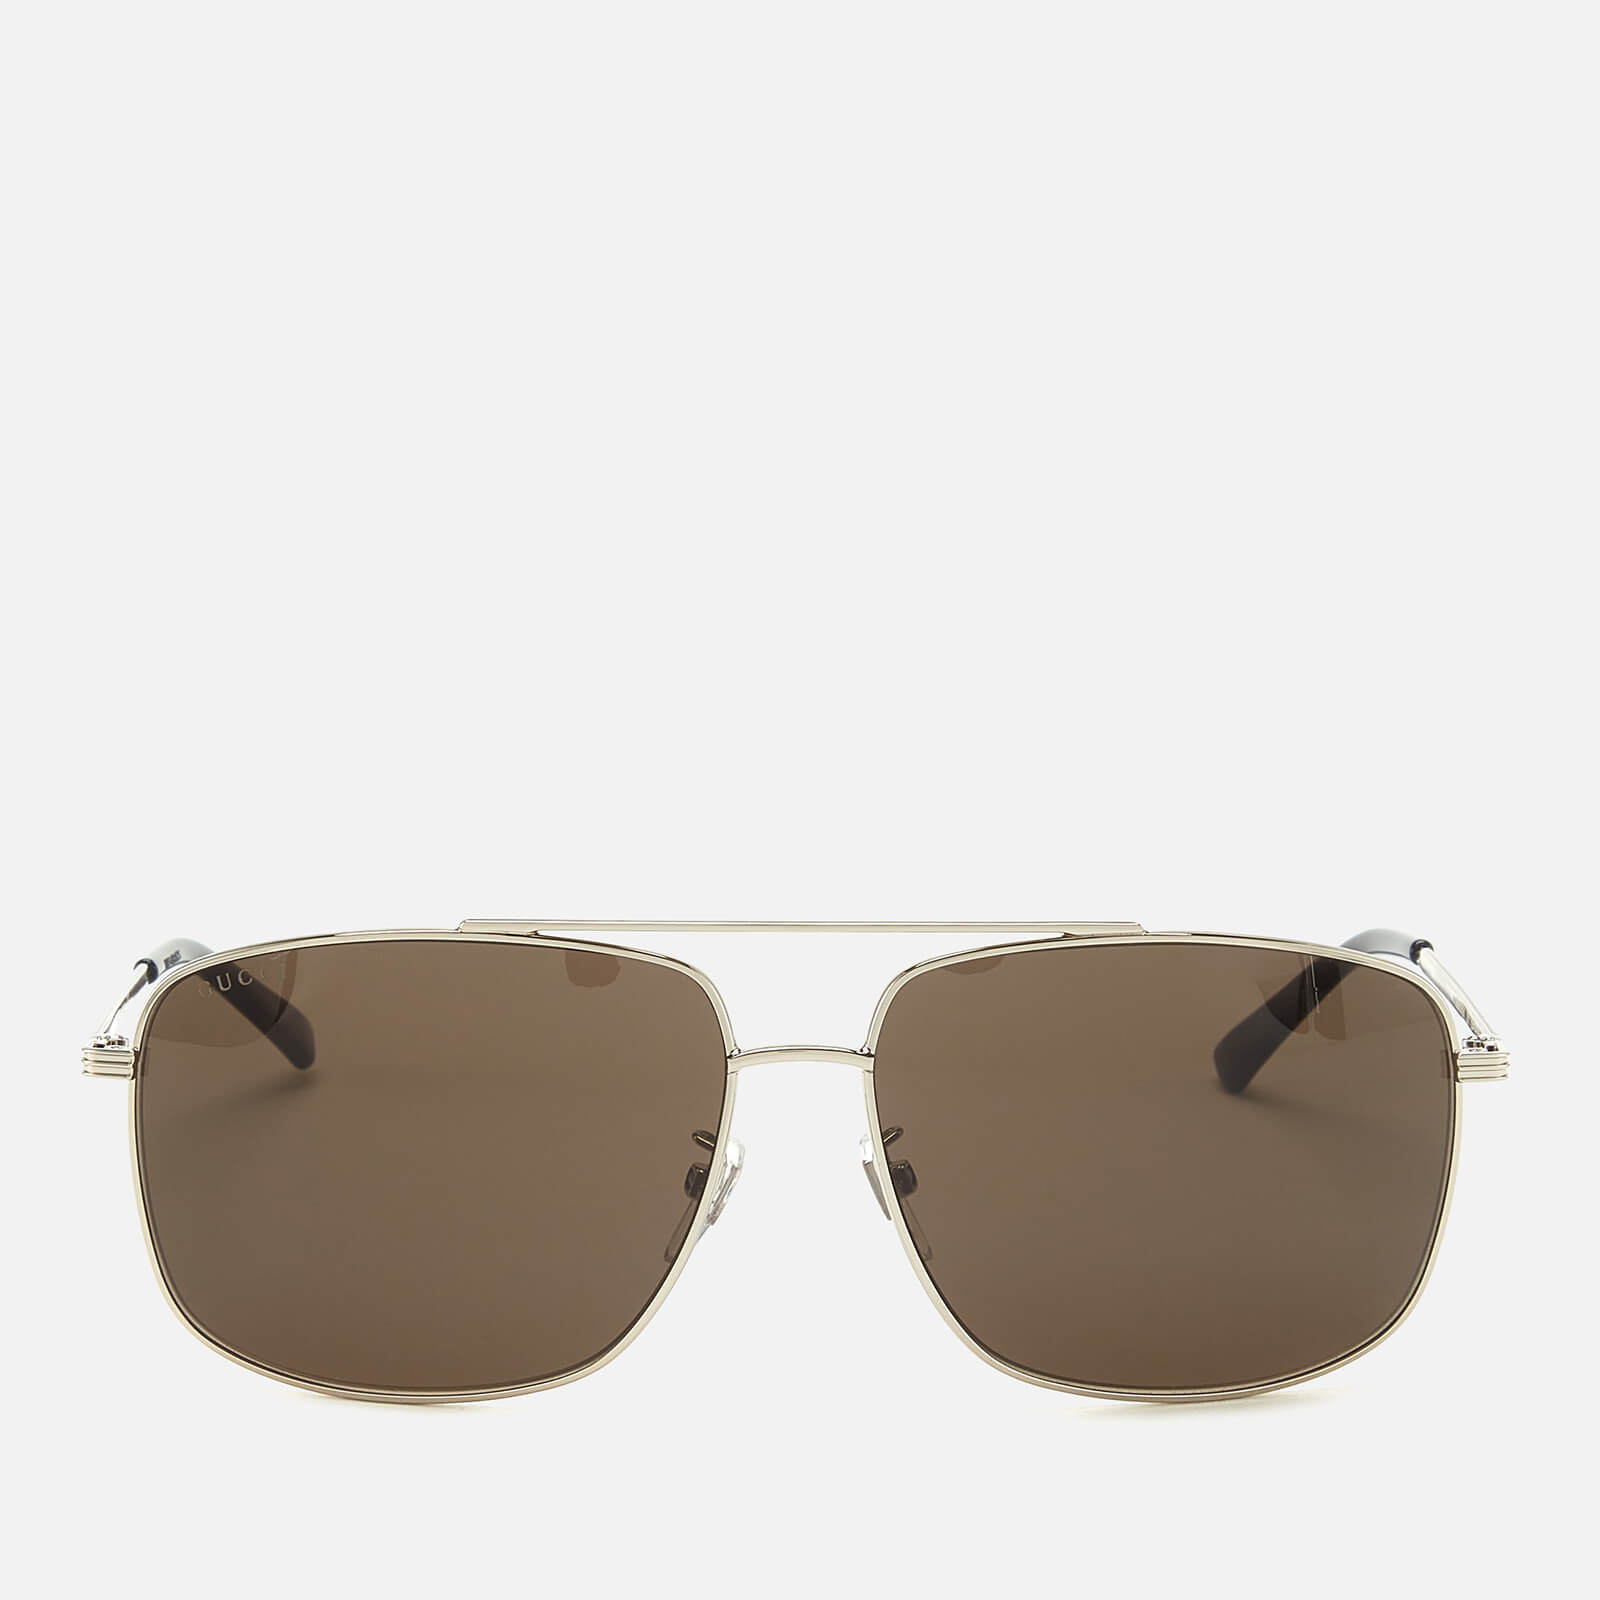 Gucci Men's Metal Frame Sunglasses - Shiny Silver